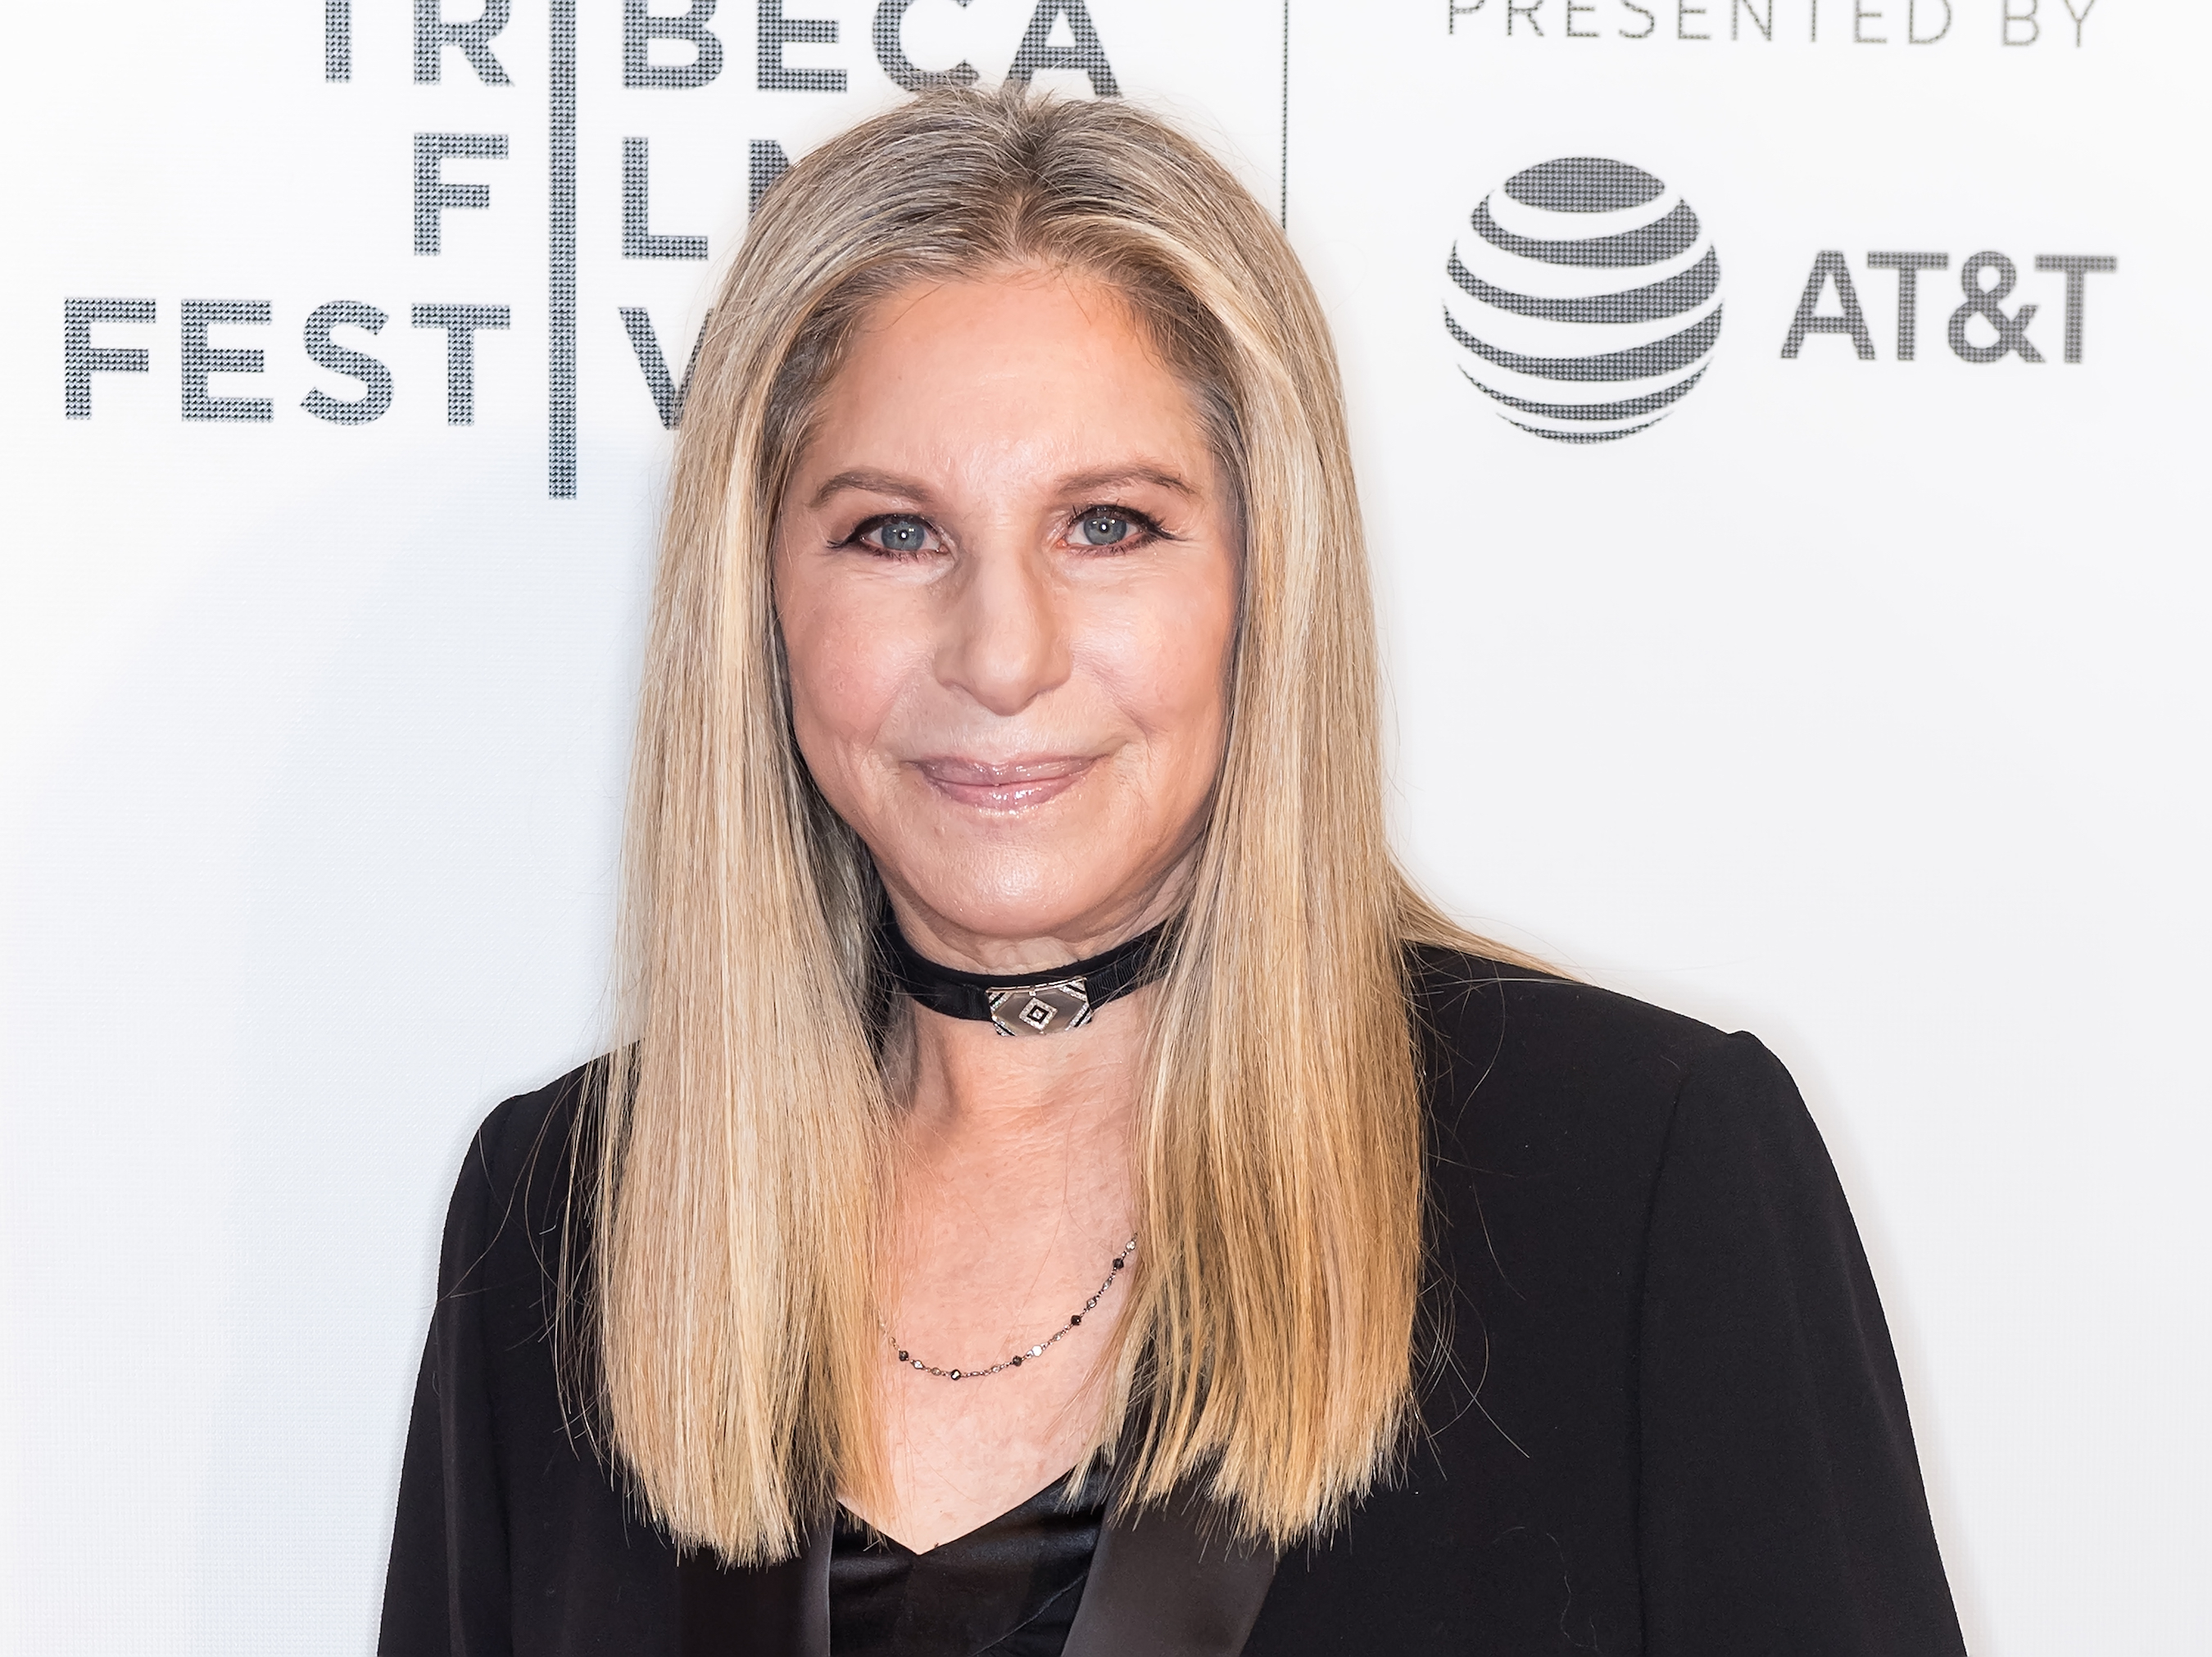 Barbra Streisand Apologizes for Michael Jackson Abuse Statement